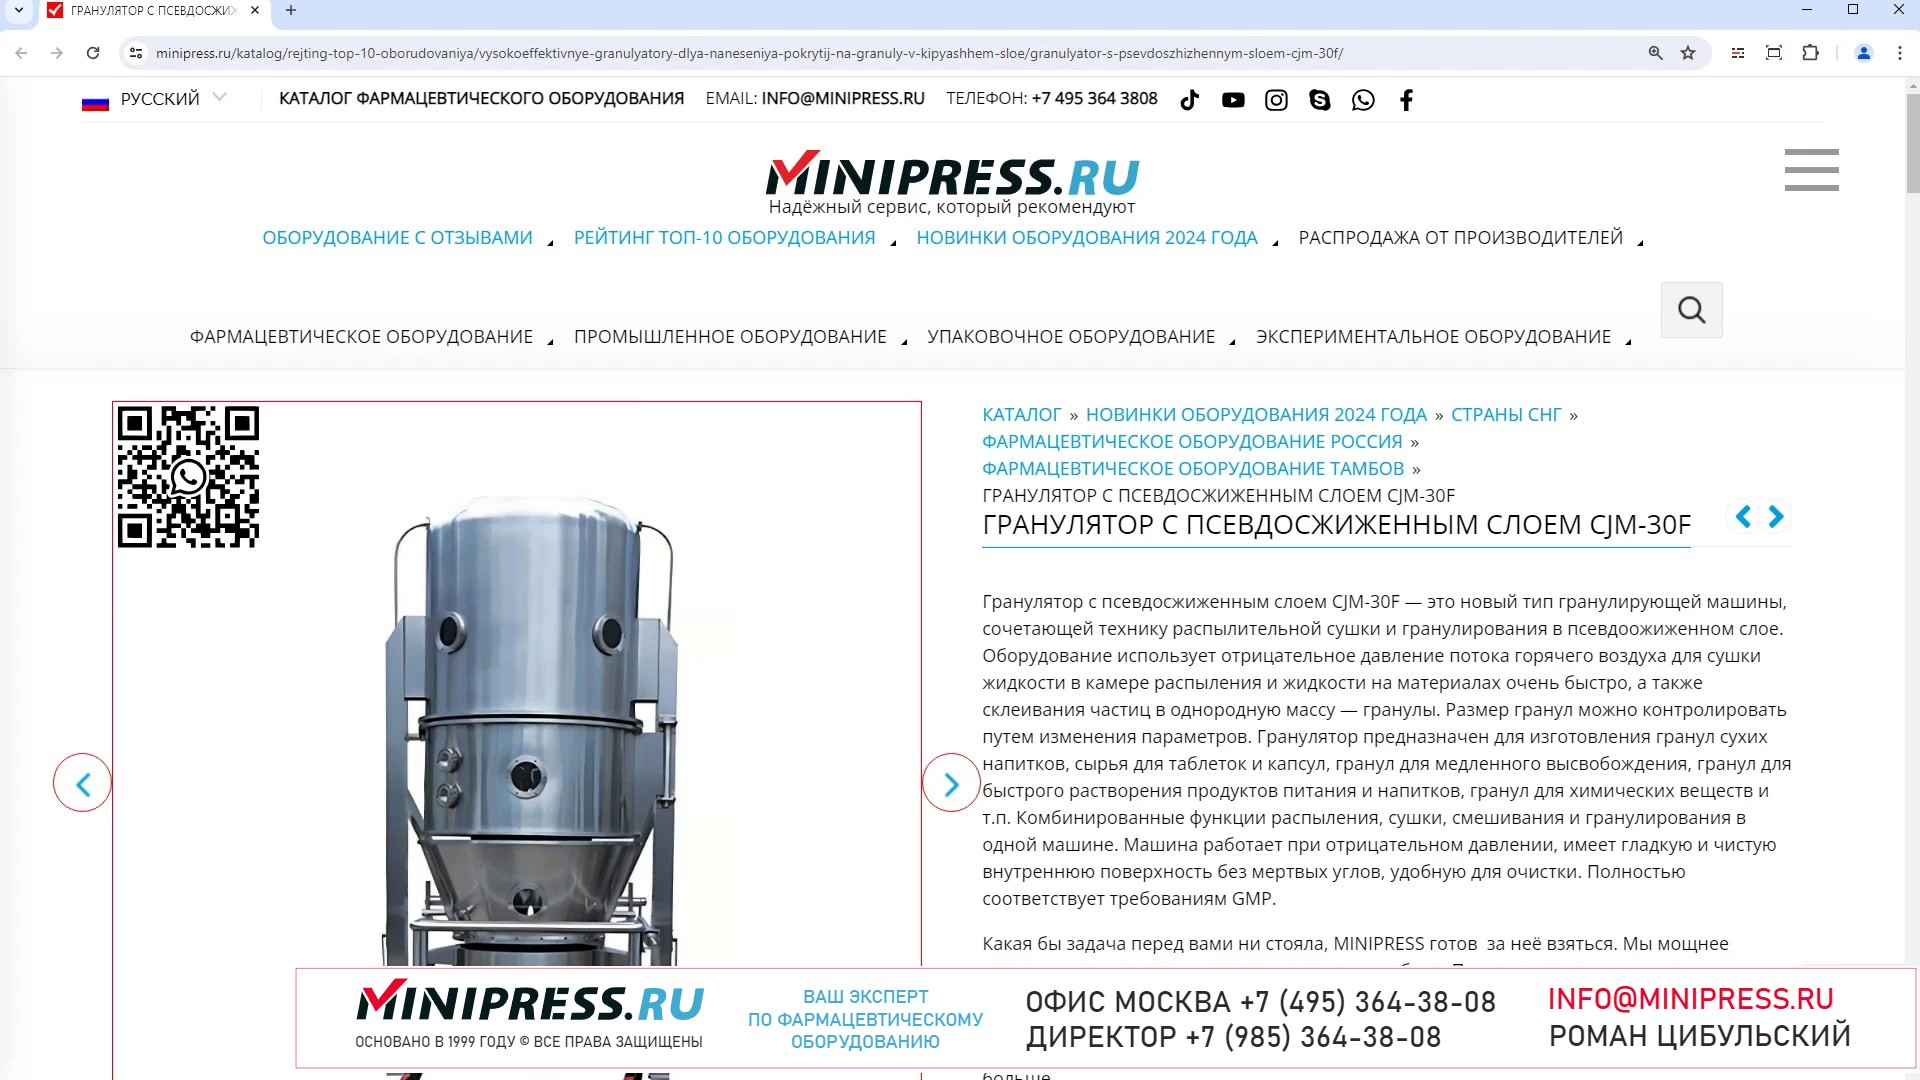 Minipress.ru Гранулятор с псевдосжиженным слоем CJM-30F